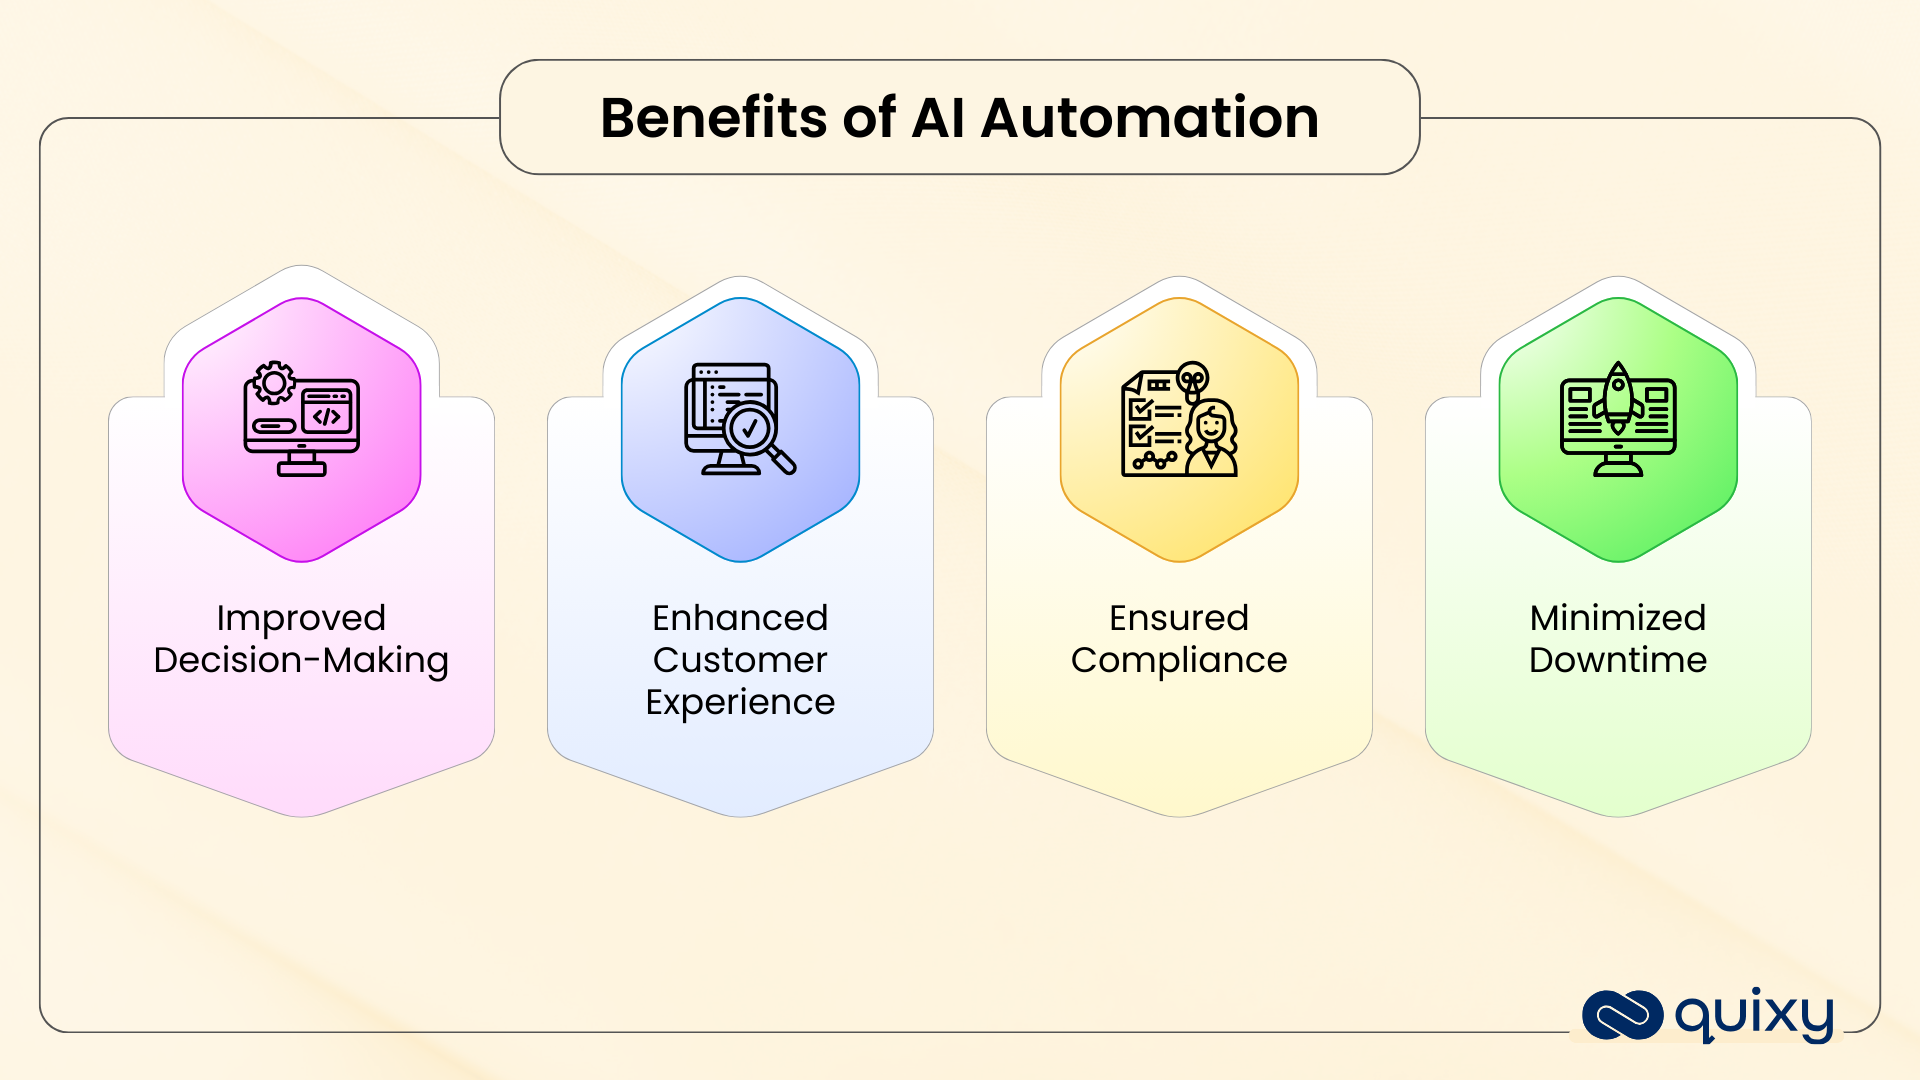 Benefits of AI Automation